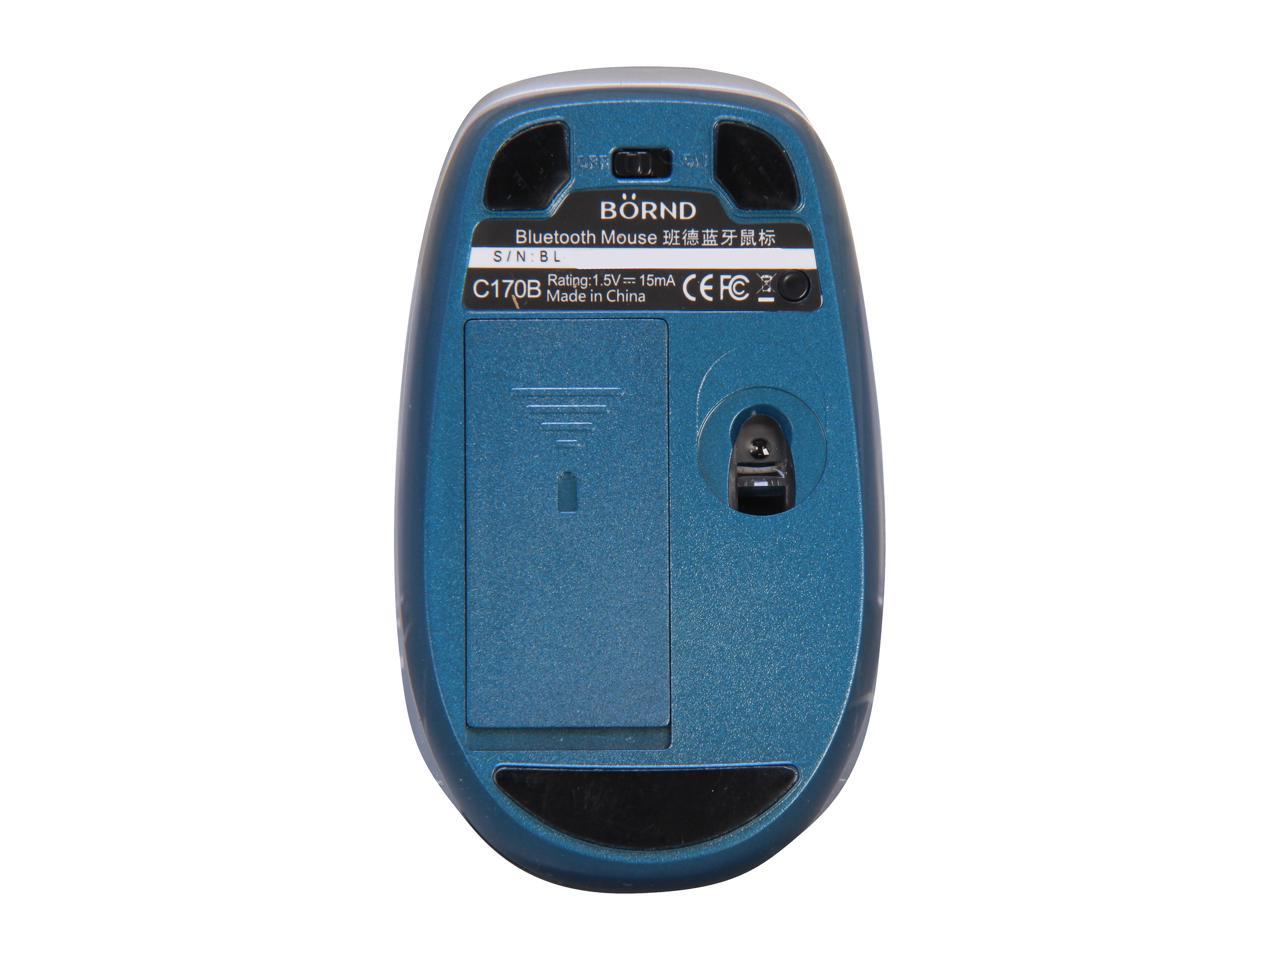 Bornd C170B Wireless Bluetooth 3.0 Optical Mouse (Blue)